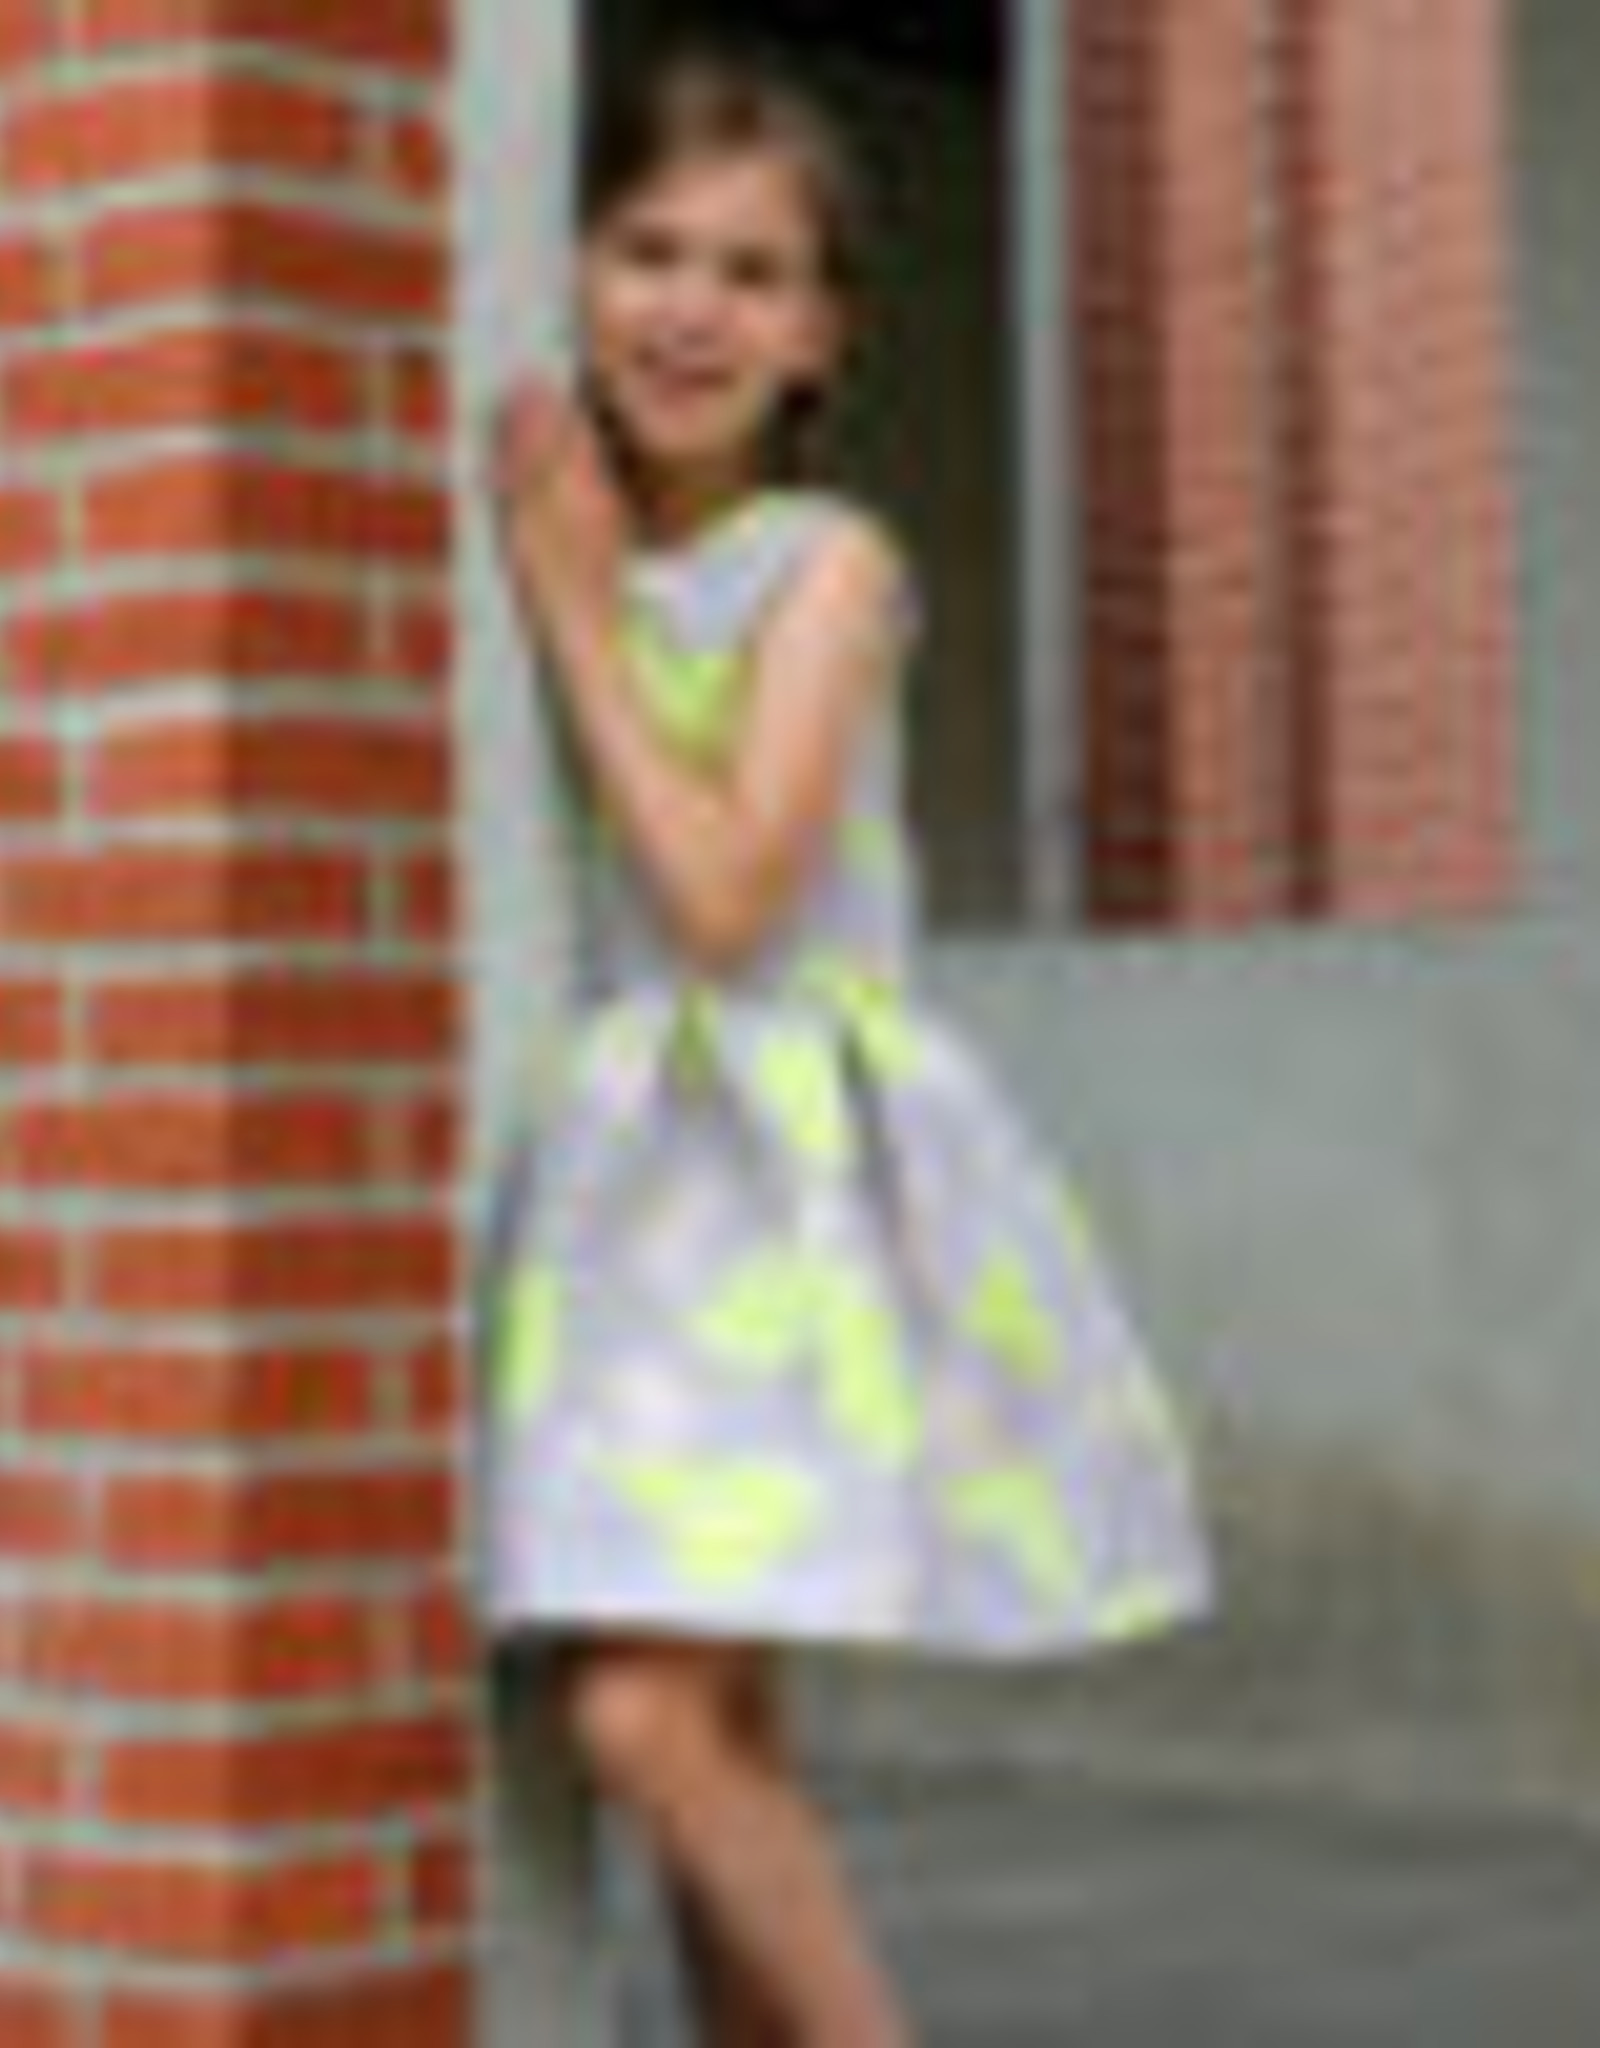 Straightgrain Hanami jurk patroon